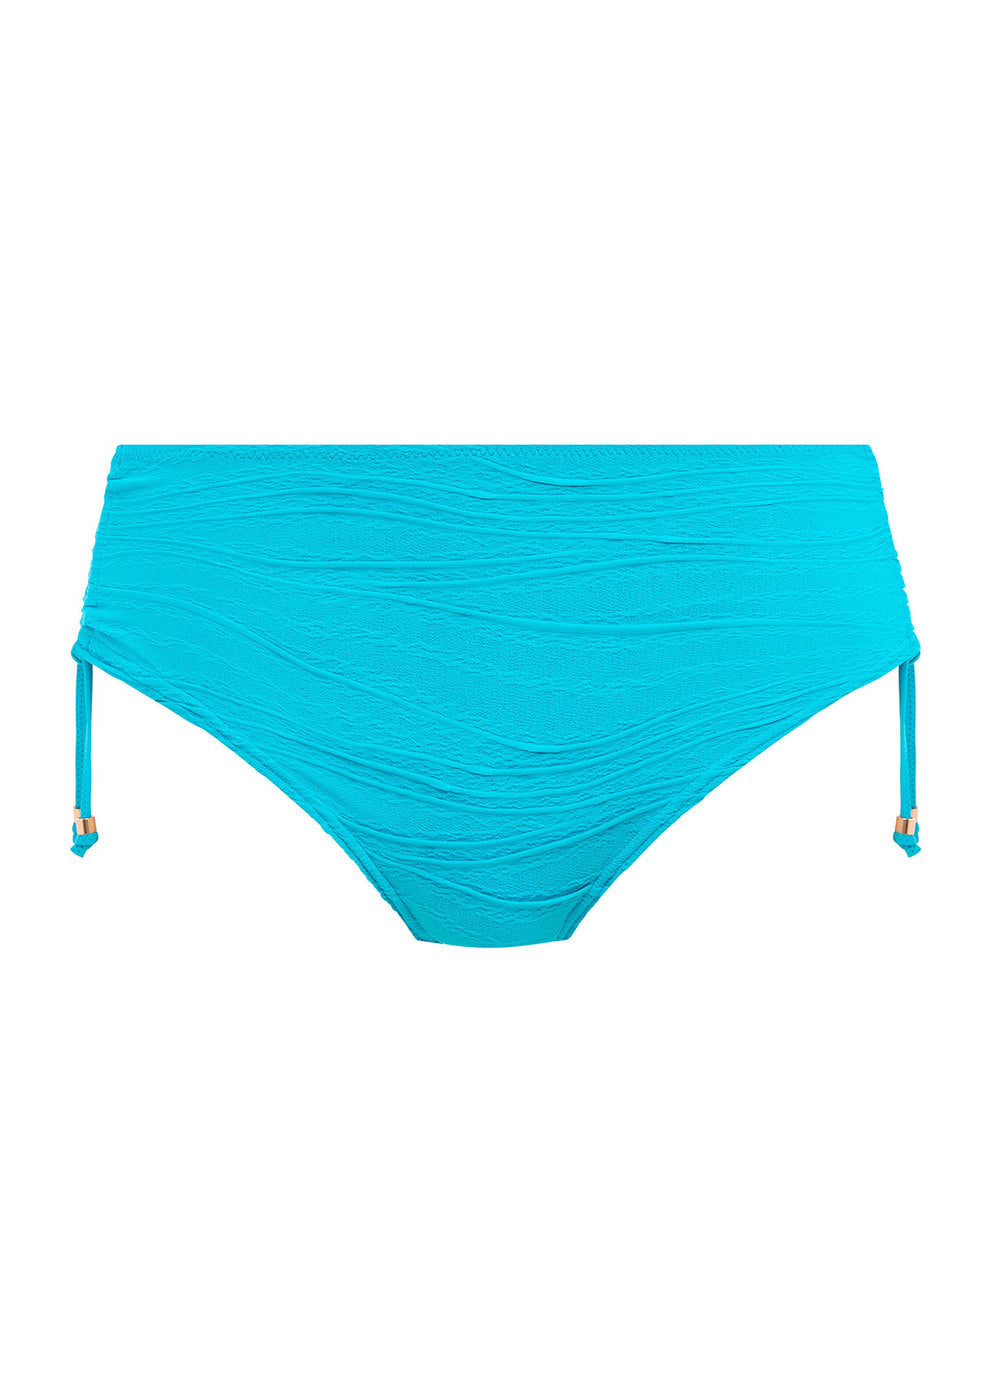 Fantasie Swim Bluebird Beach Waves Matching Bikini Short